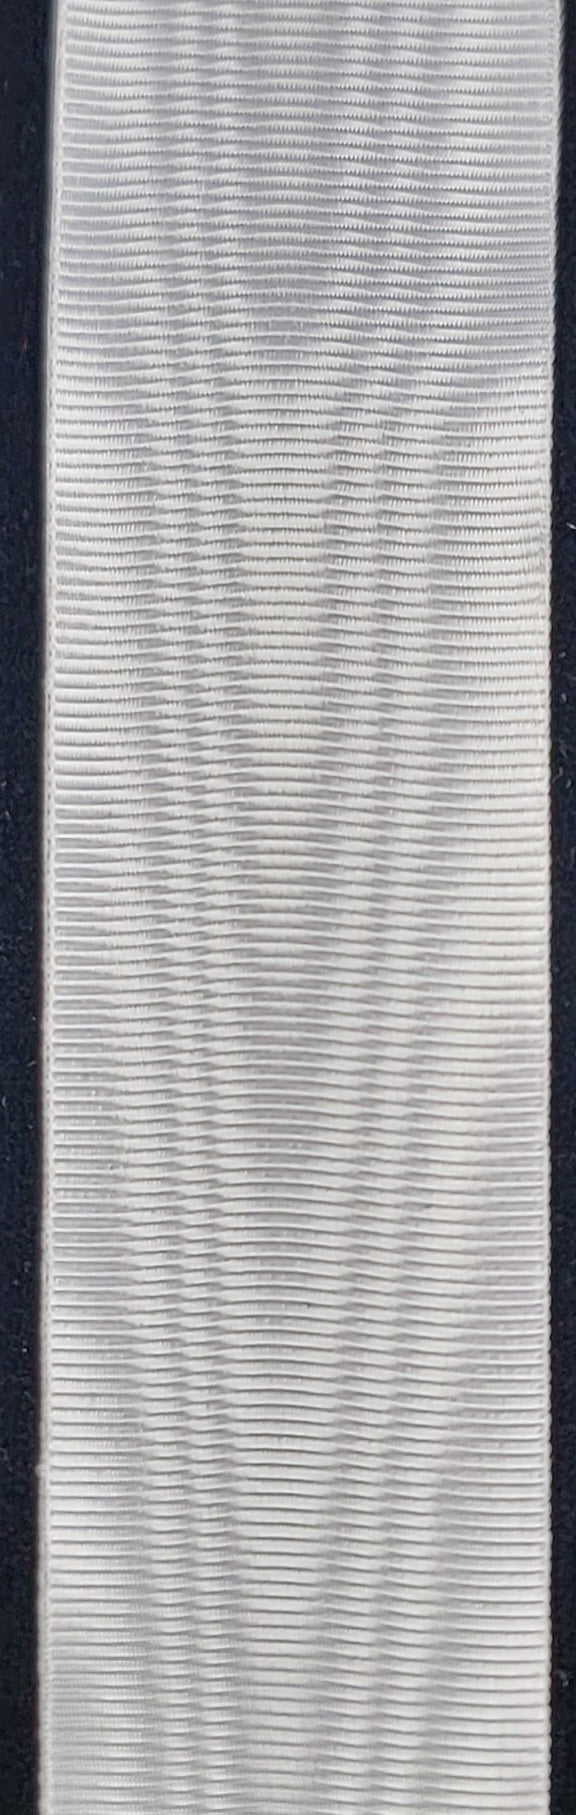 Ribbon, Polar Medal